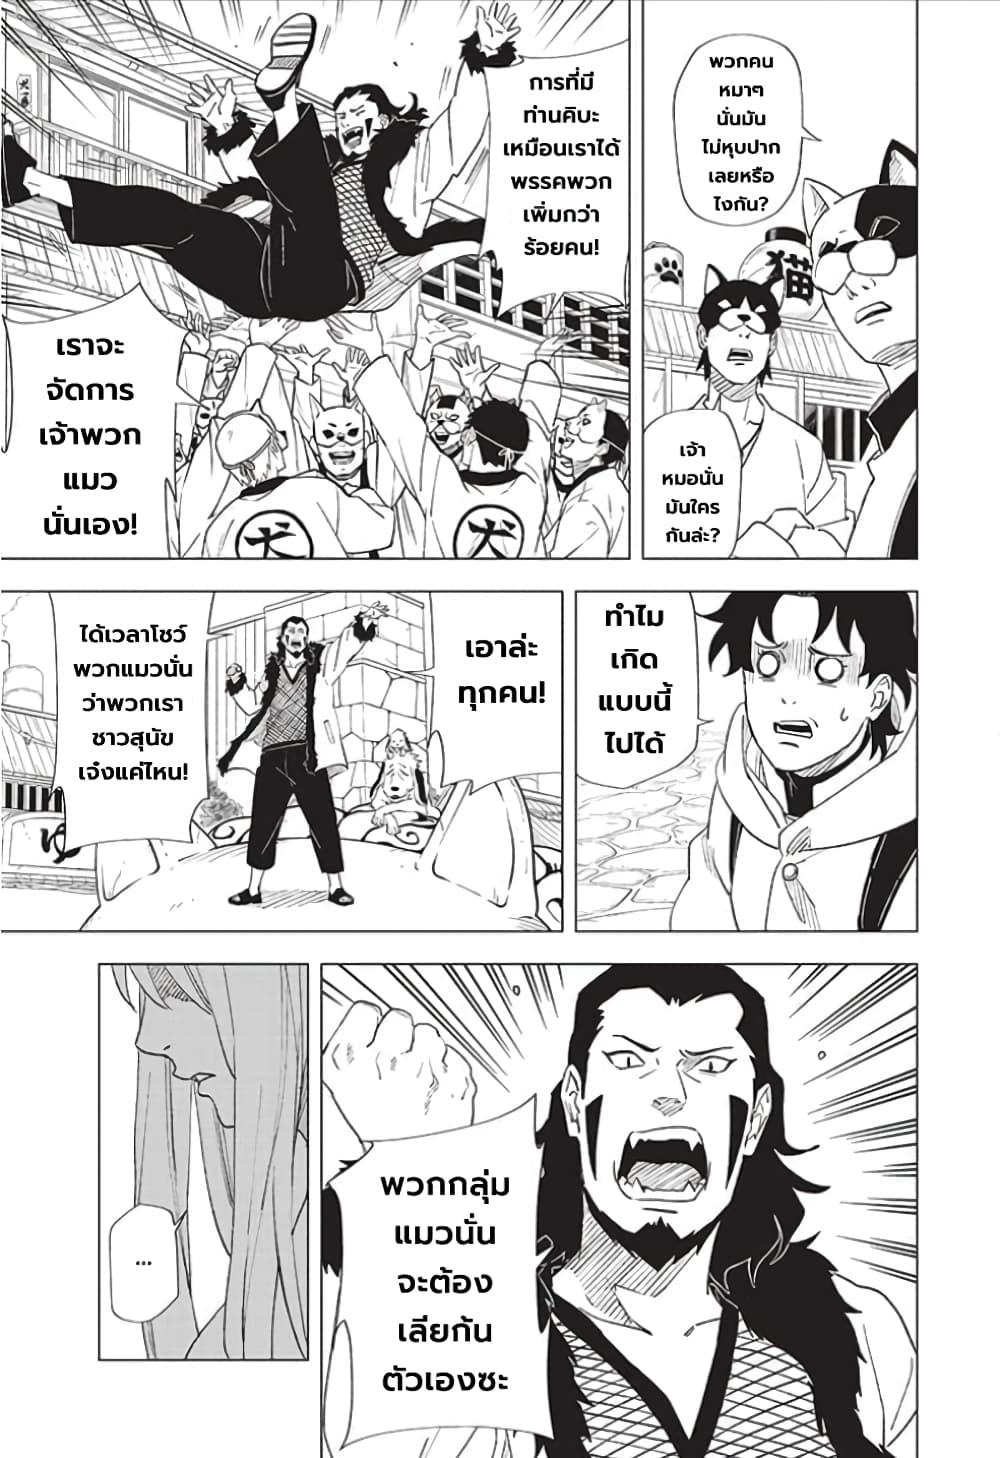 Naruto Konoha’s Story – The Steam Ninja Scrolls The Manga ตอนที่ 5 (7)